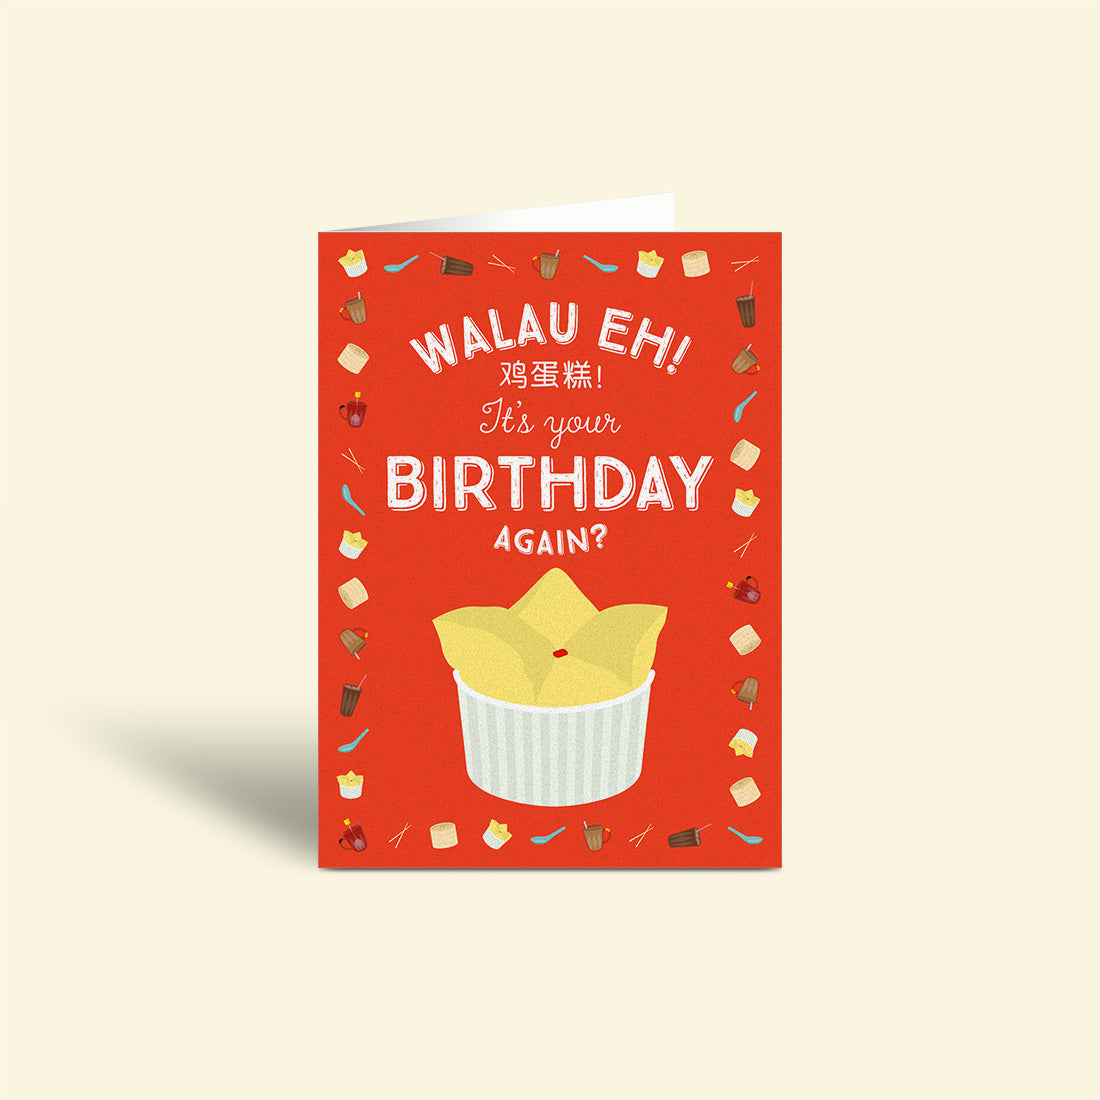 Birthday Card – Walau Eh! Ji Dan Gao